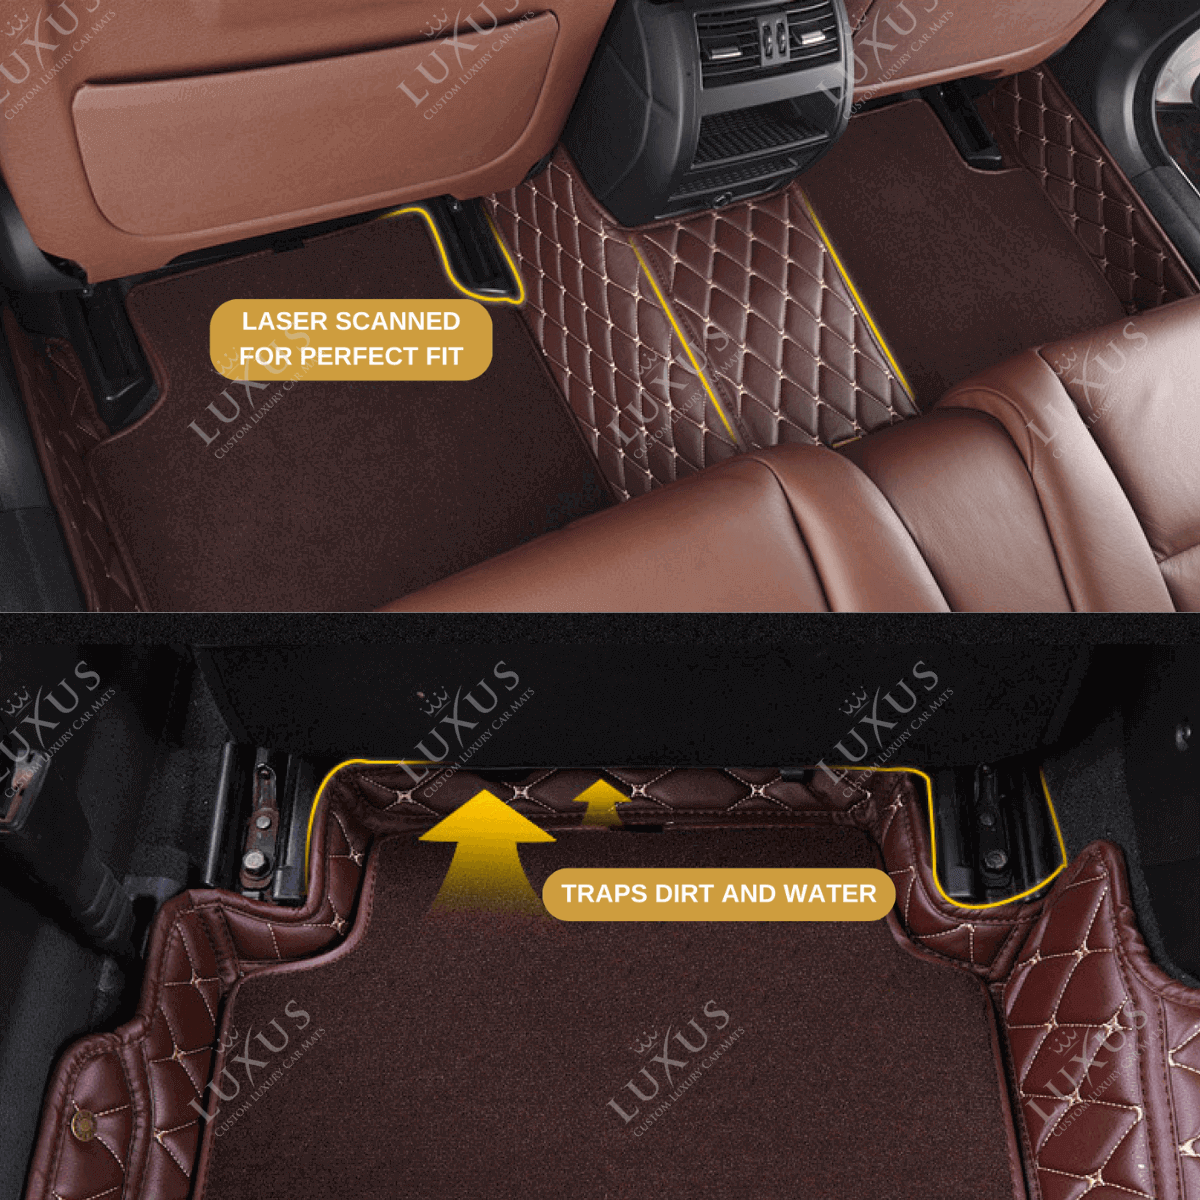 Black & Red Stitching Honeycomb Base & Black Top Carpet Double Layer Luxury Car Mats Set